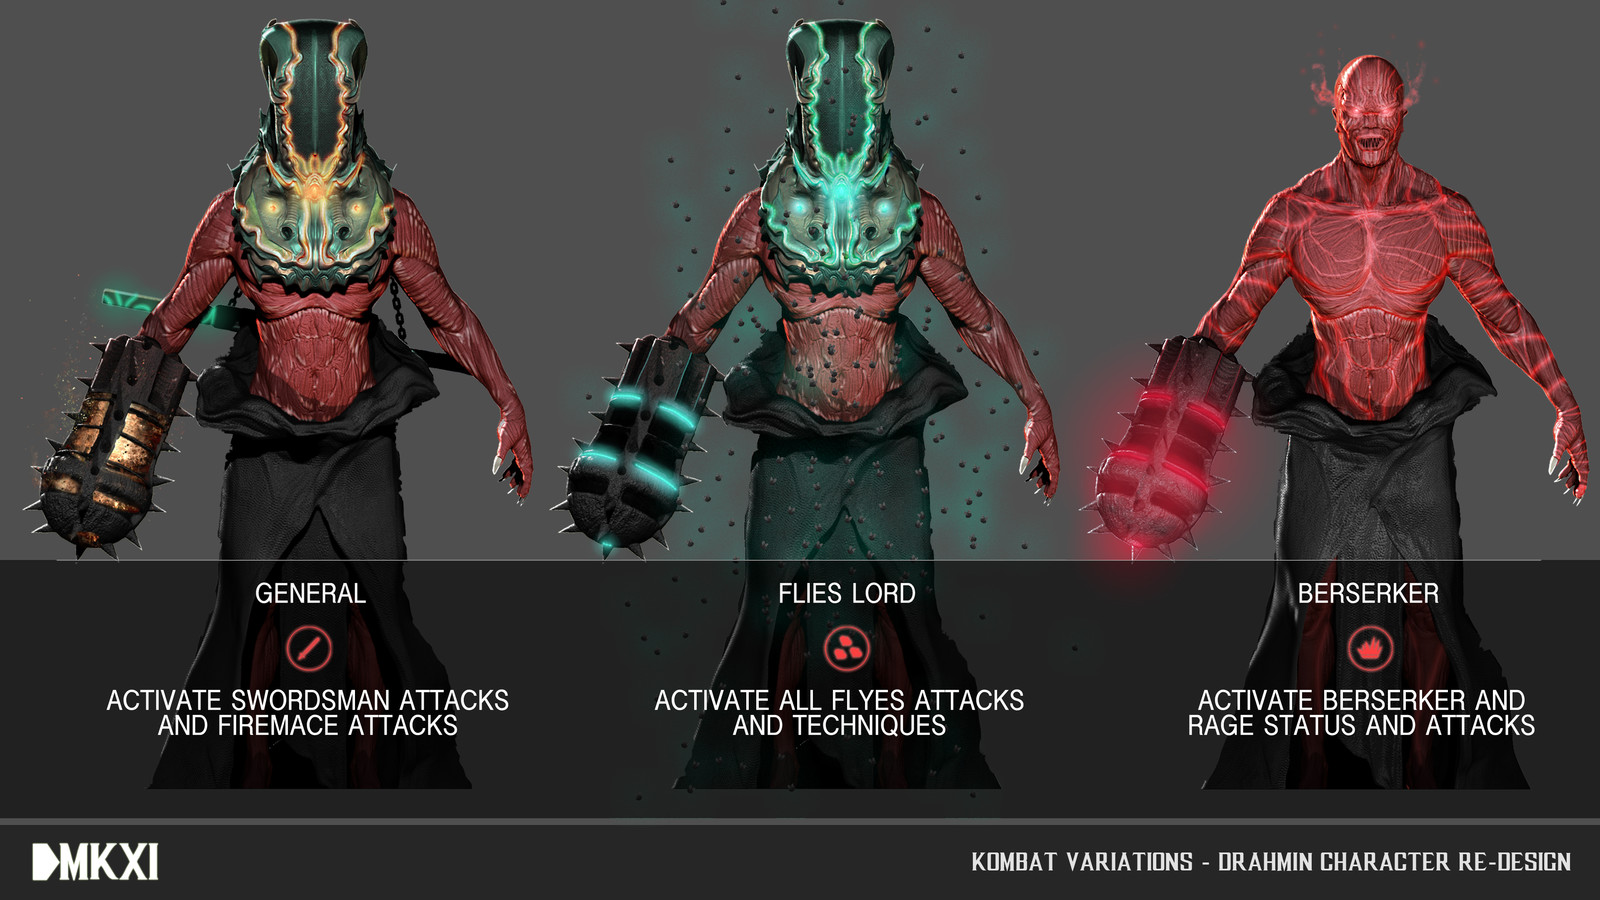 Mortal Kombat XI character re-design: DRAHMIN.